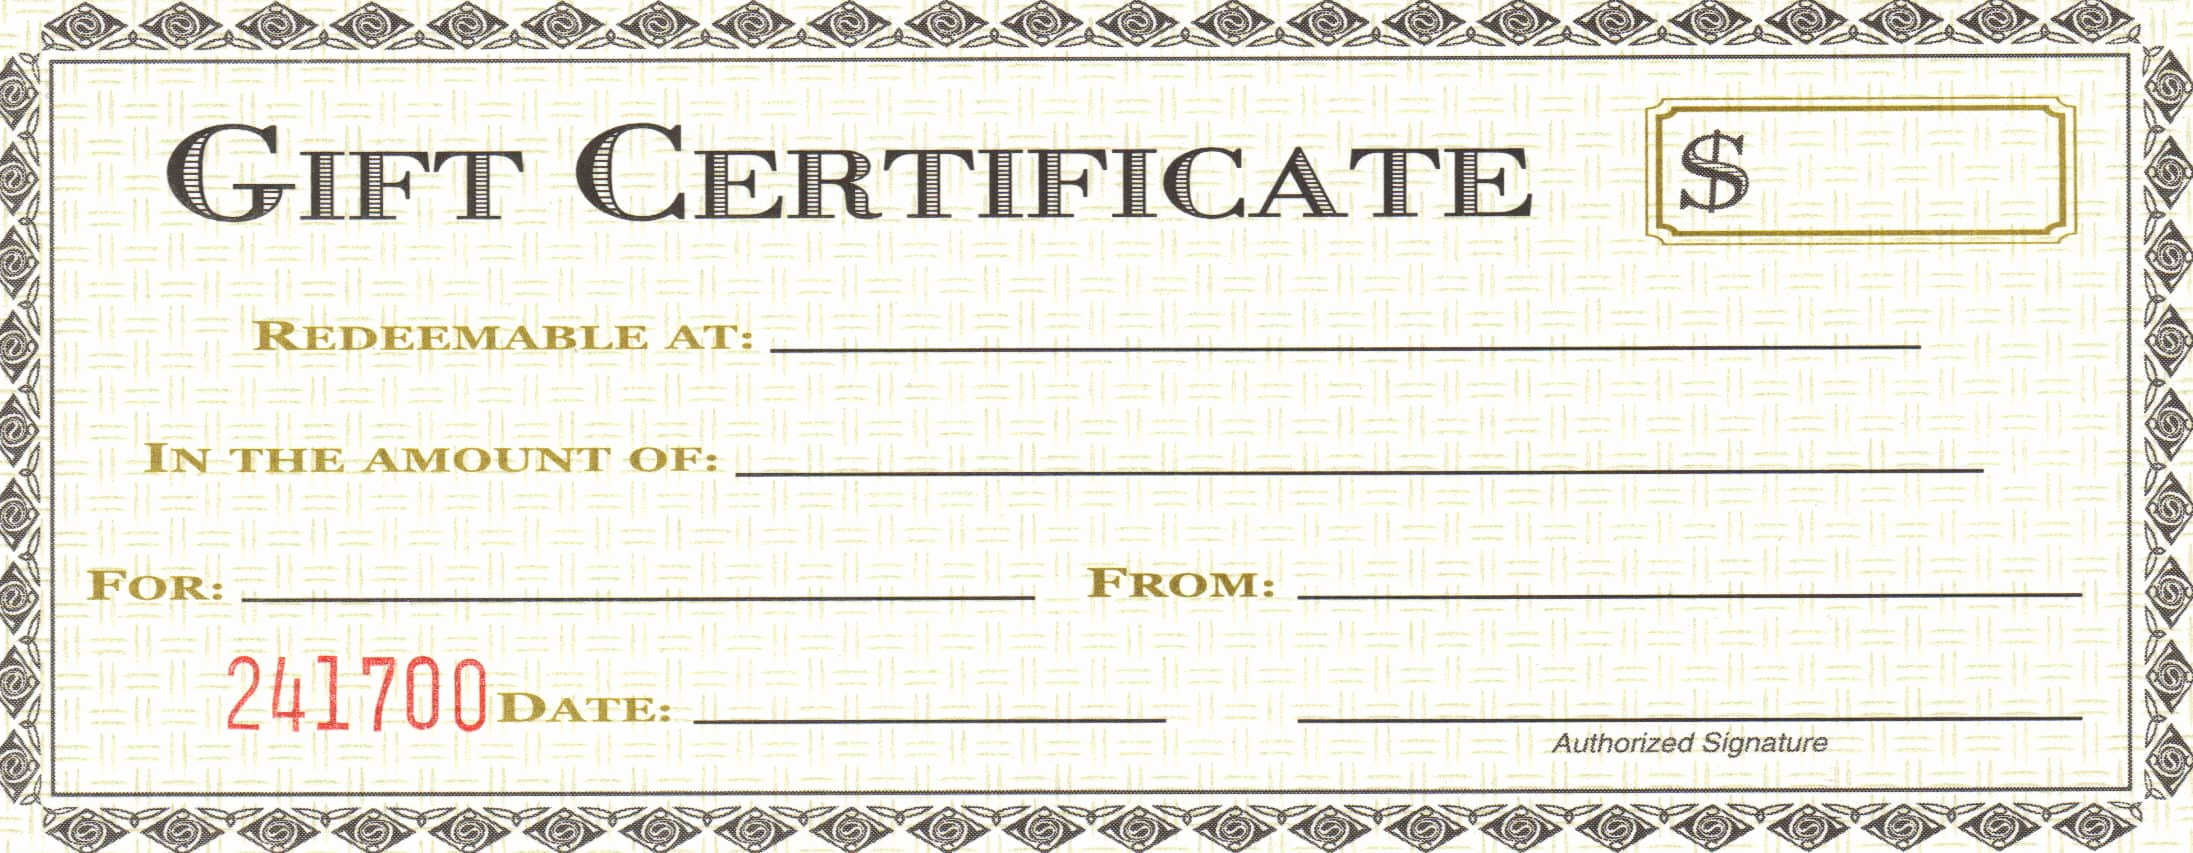 Custom Gift Certificate Template Free Luxury 18 Gift Certificate Templates Excel Pdf formats